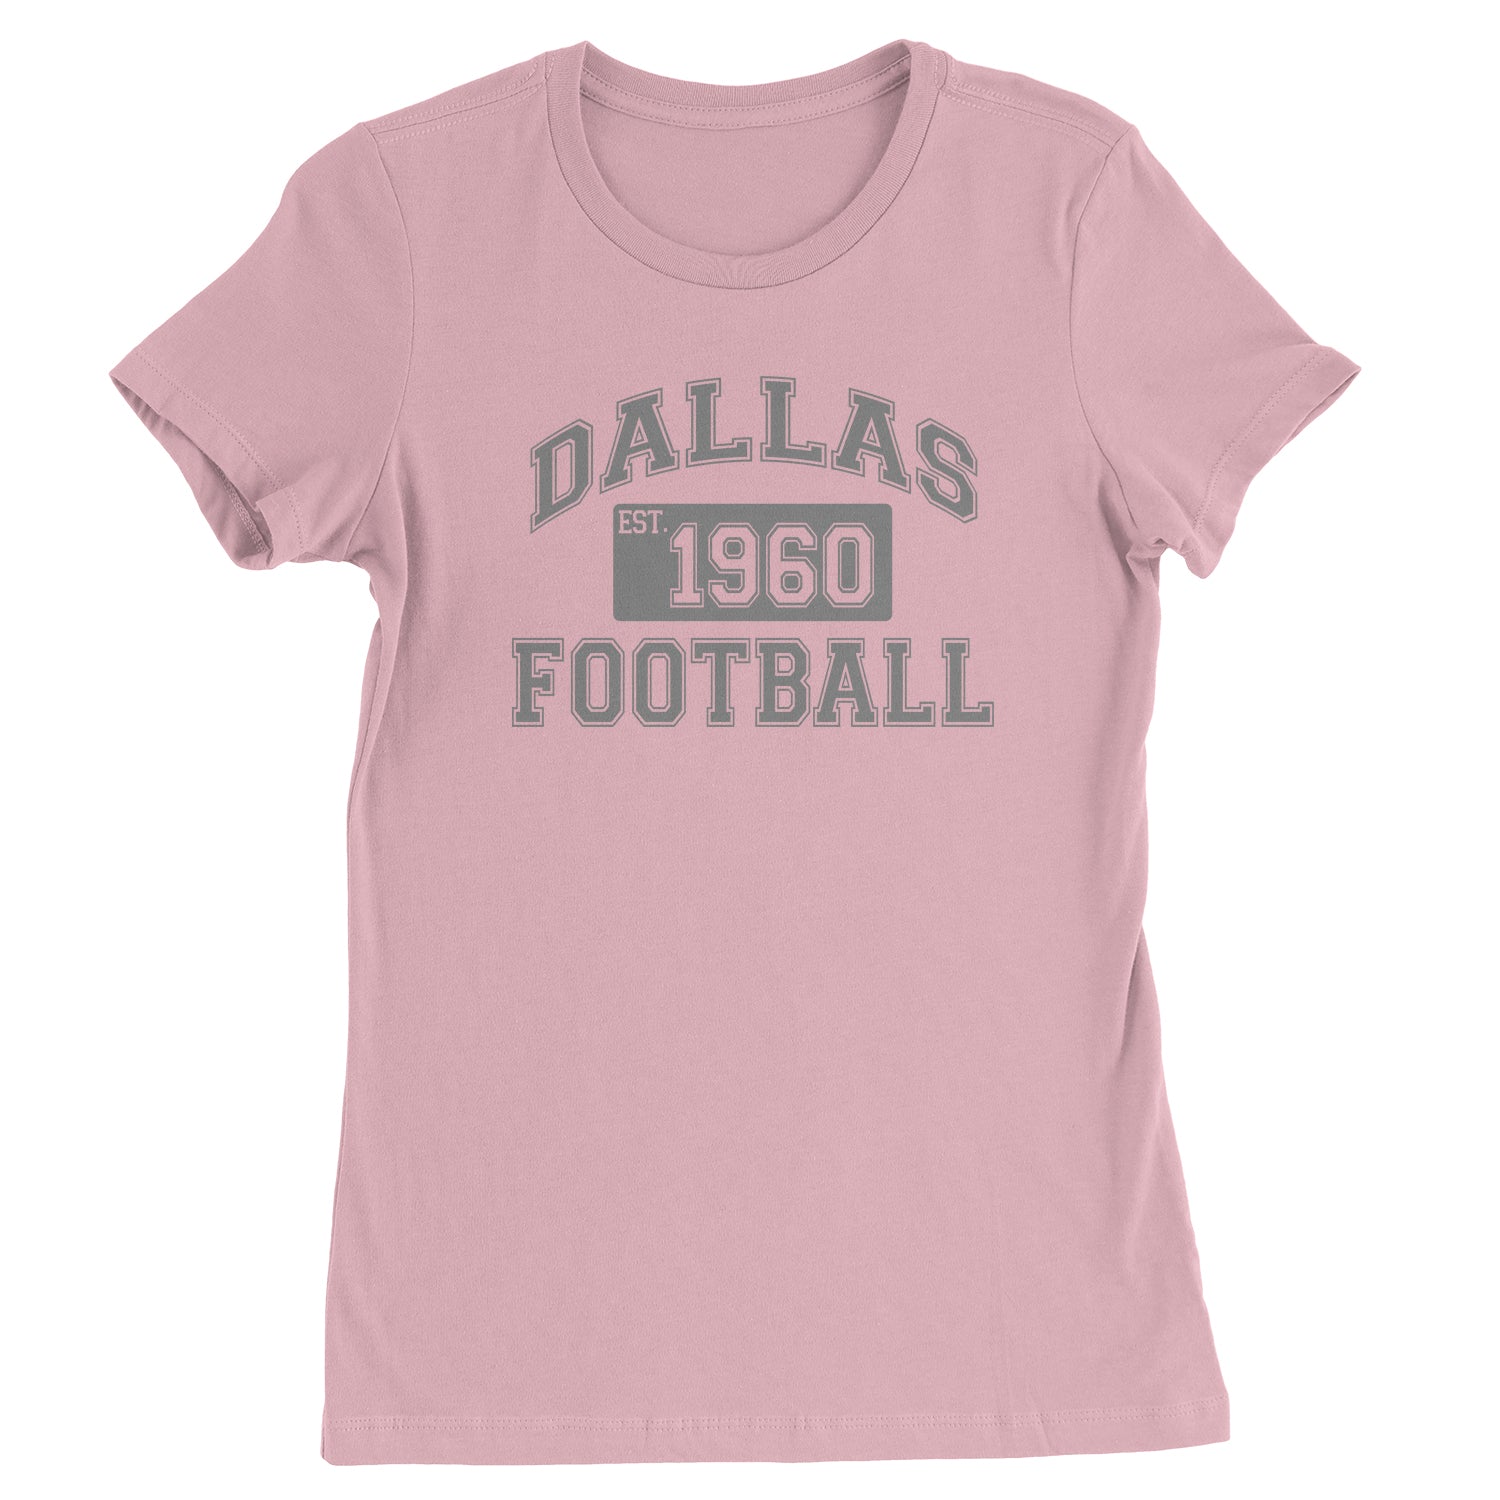 Dallas Football Established 1960 Womens T-shirt boys, dem by Expression Tees